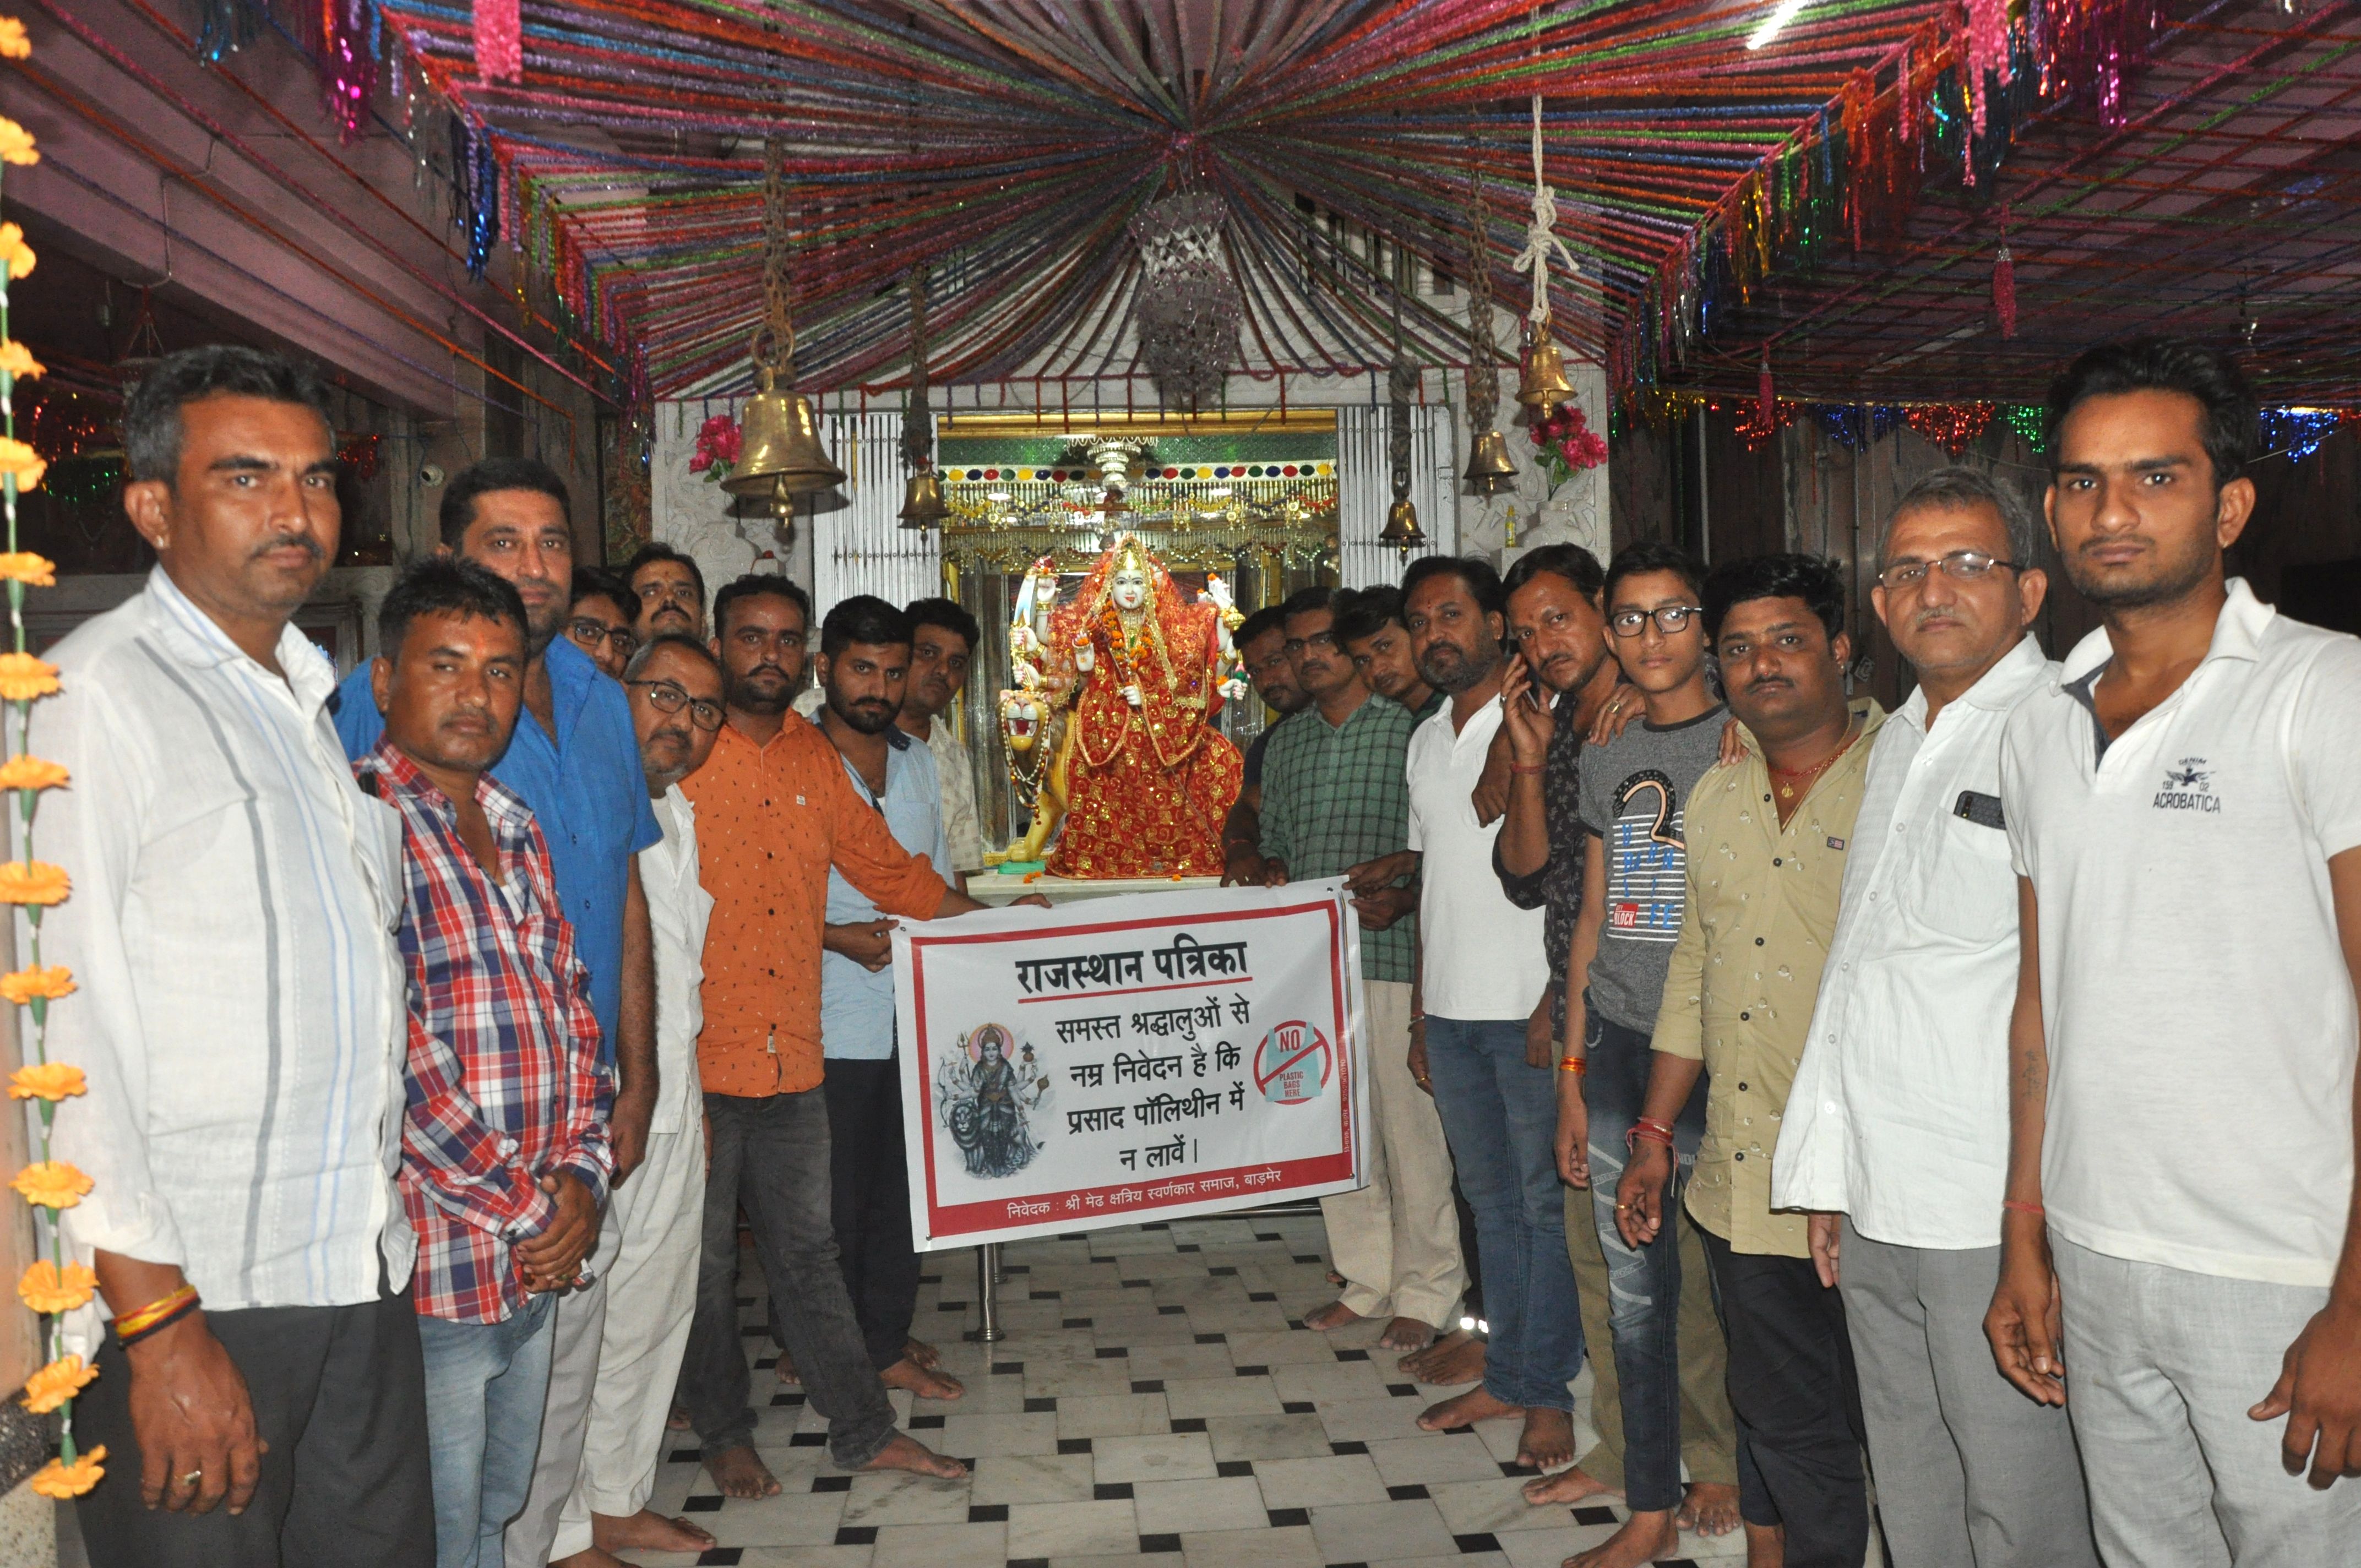 Resolution of polythene ban in Jagdamba Mata temple